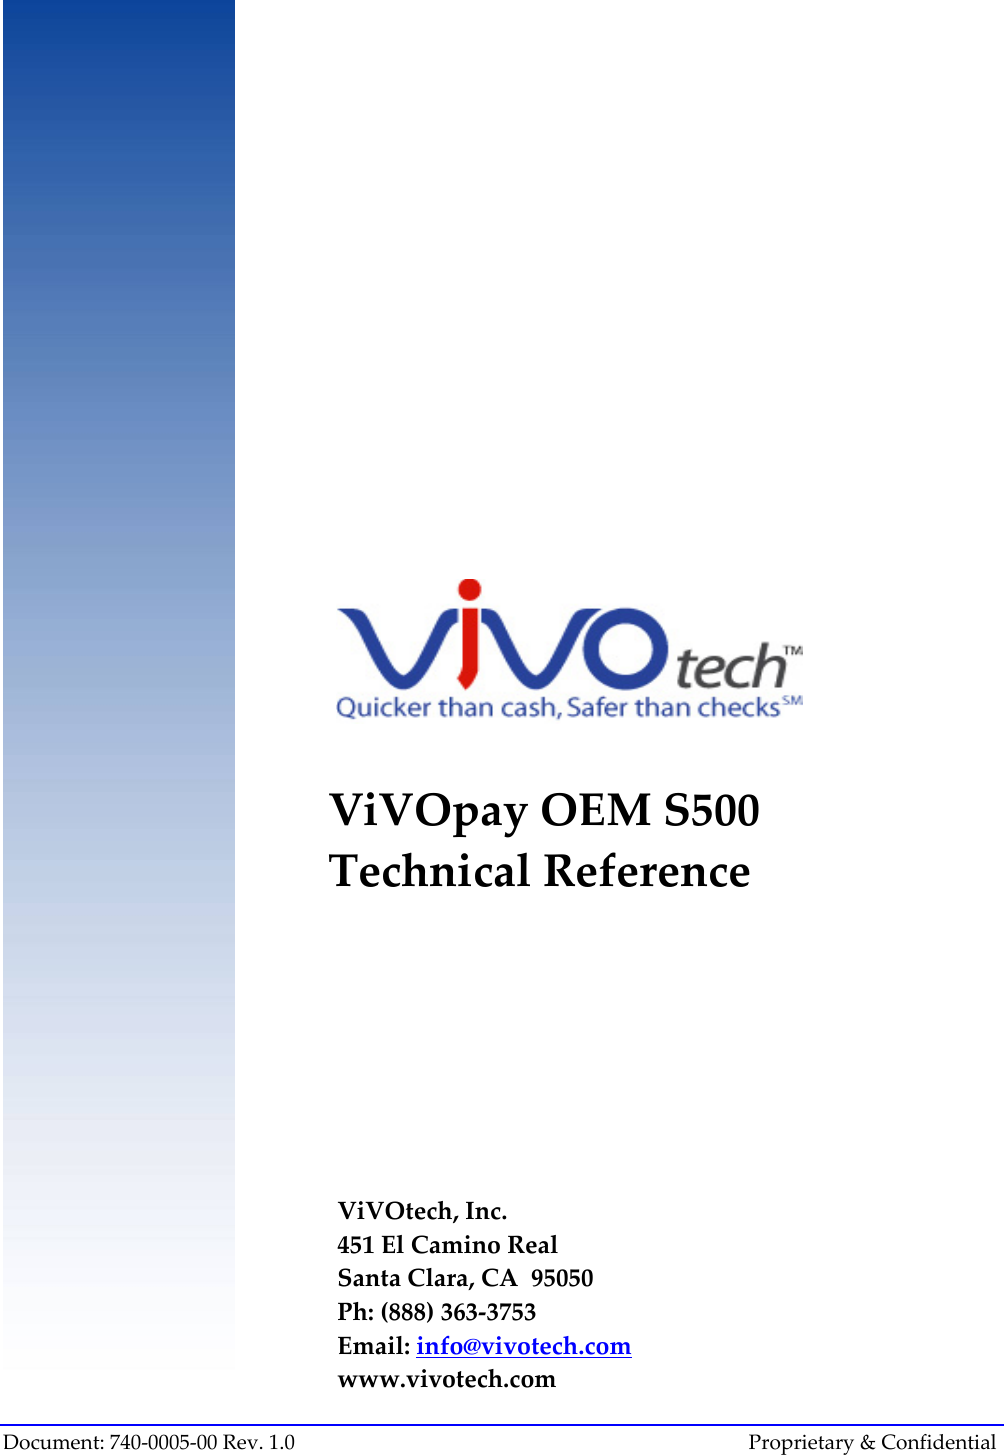  ViVOpayOEMS500TechnicalReference ViVOtech,Inc.451ElCaminoRealSantaClara,CA95050Ph:(888)363‐3753Email:info@vivotech.comwww.vivotech.comDocument:740‐0005‐00Rev.1.0 &amp;ConfidentialProprietary